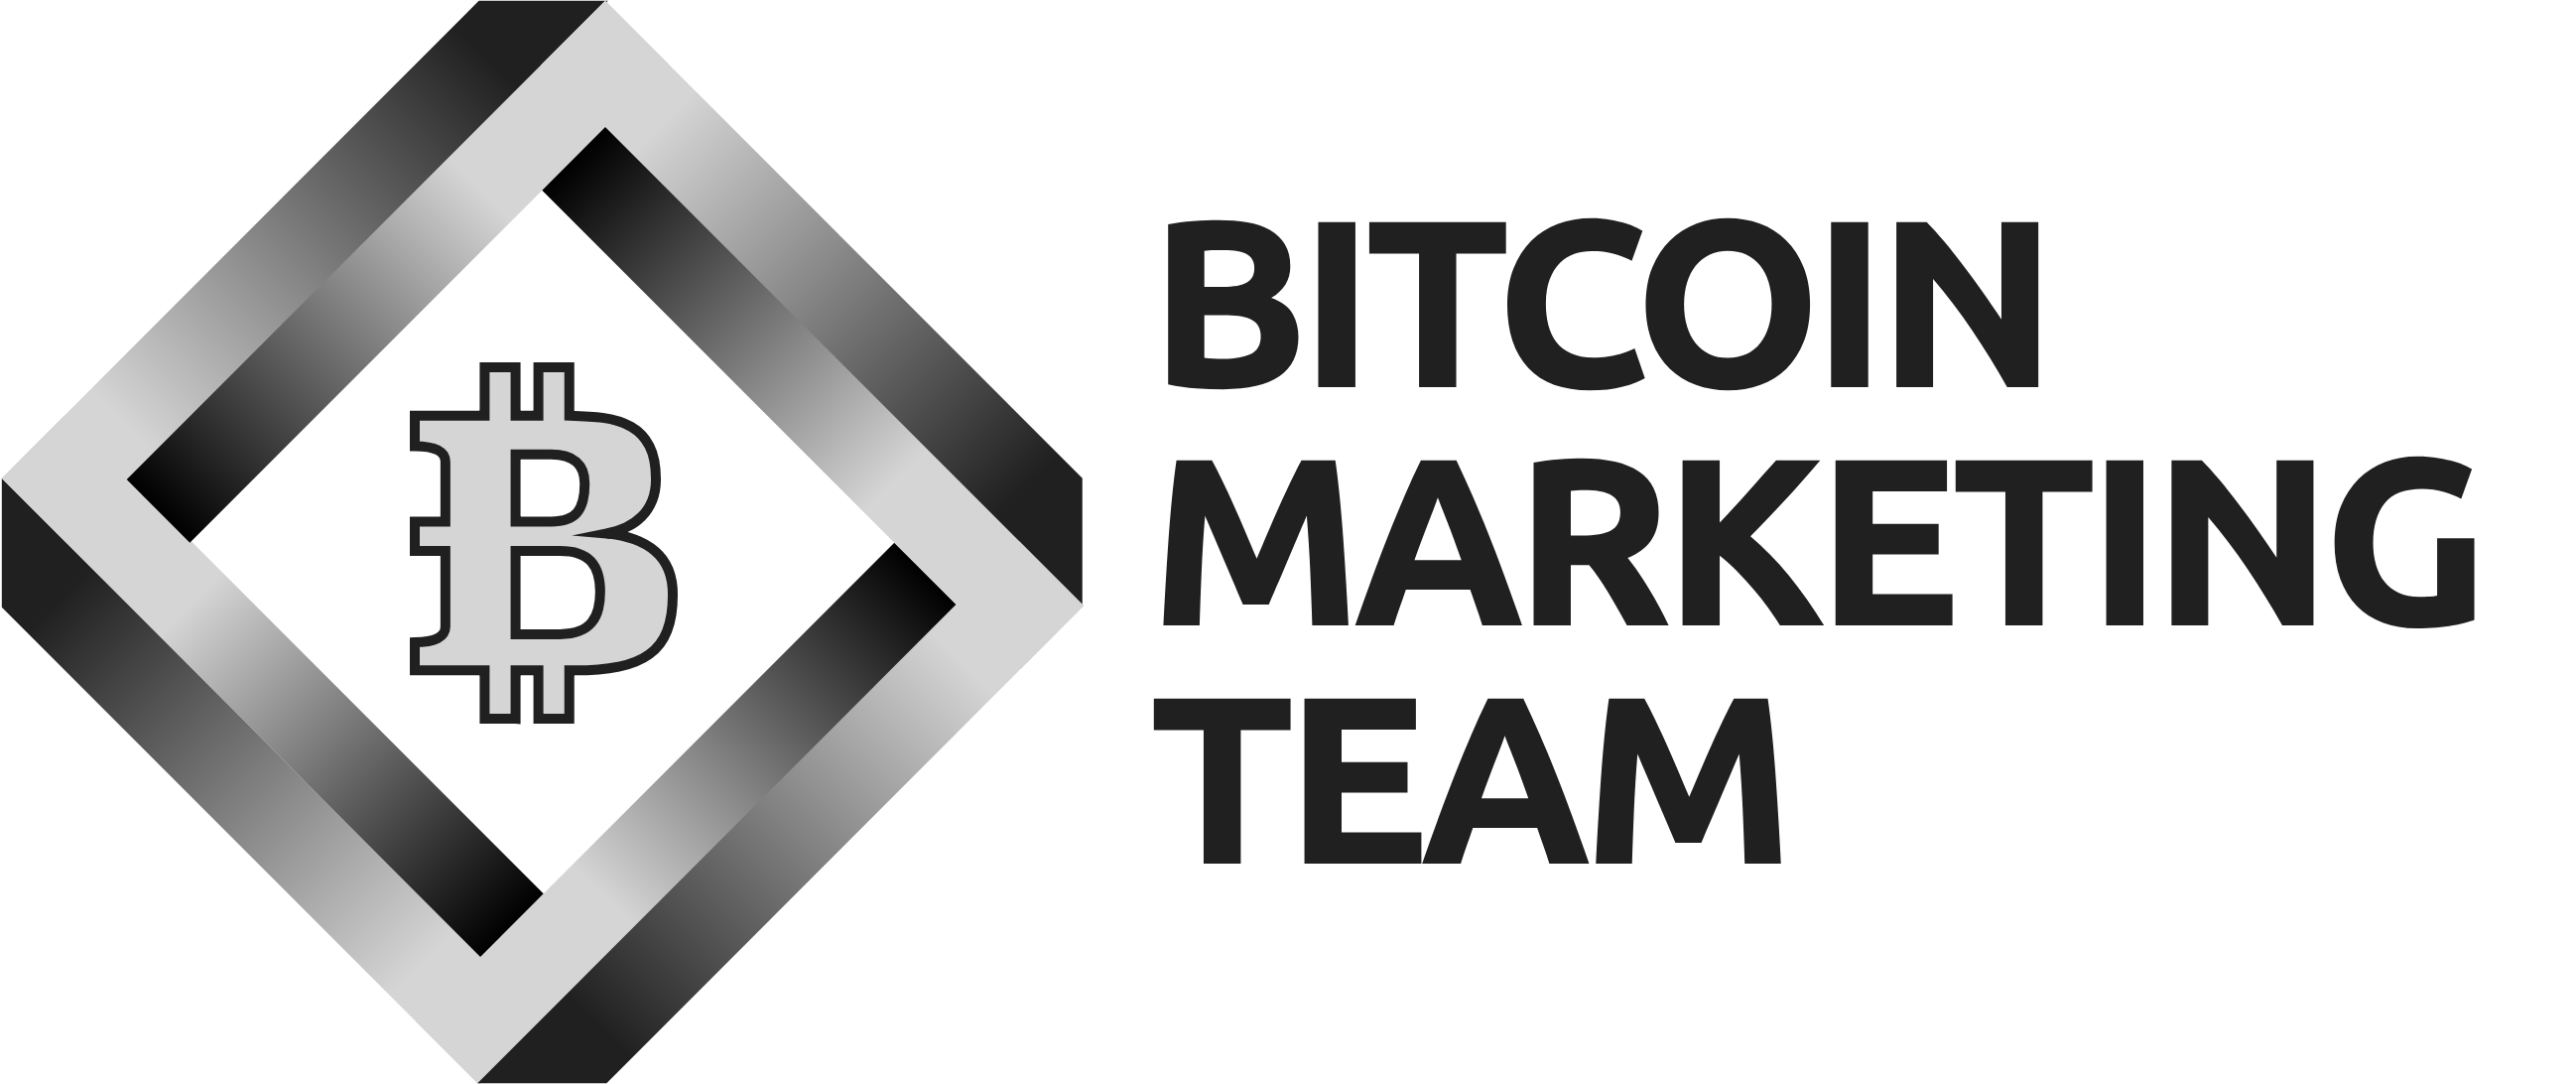 Bitcoin Marketing Team logo.png